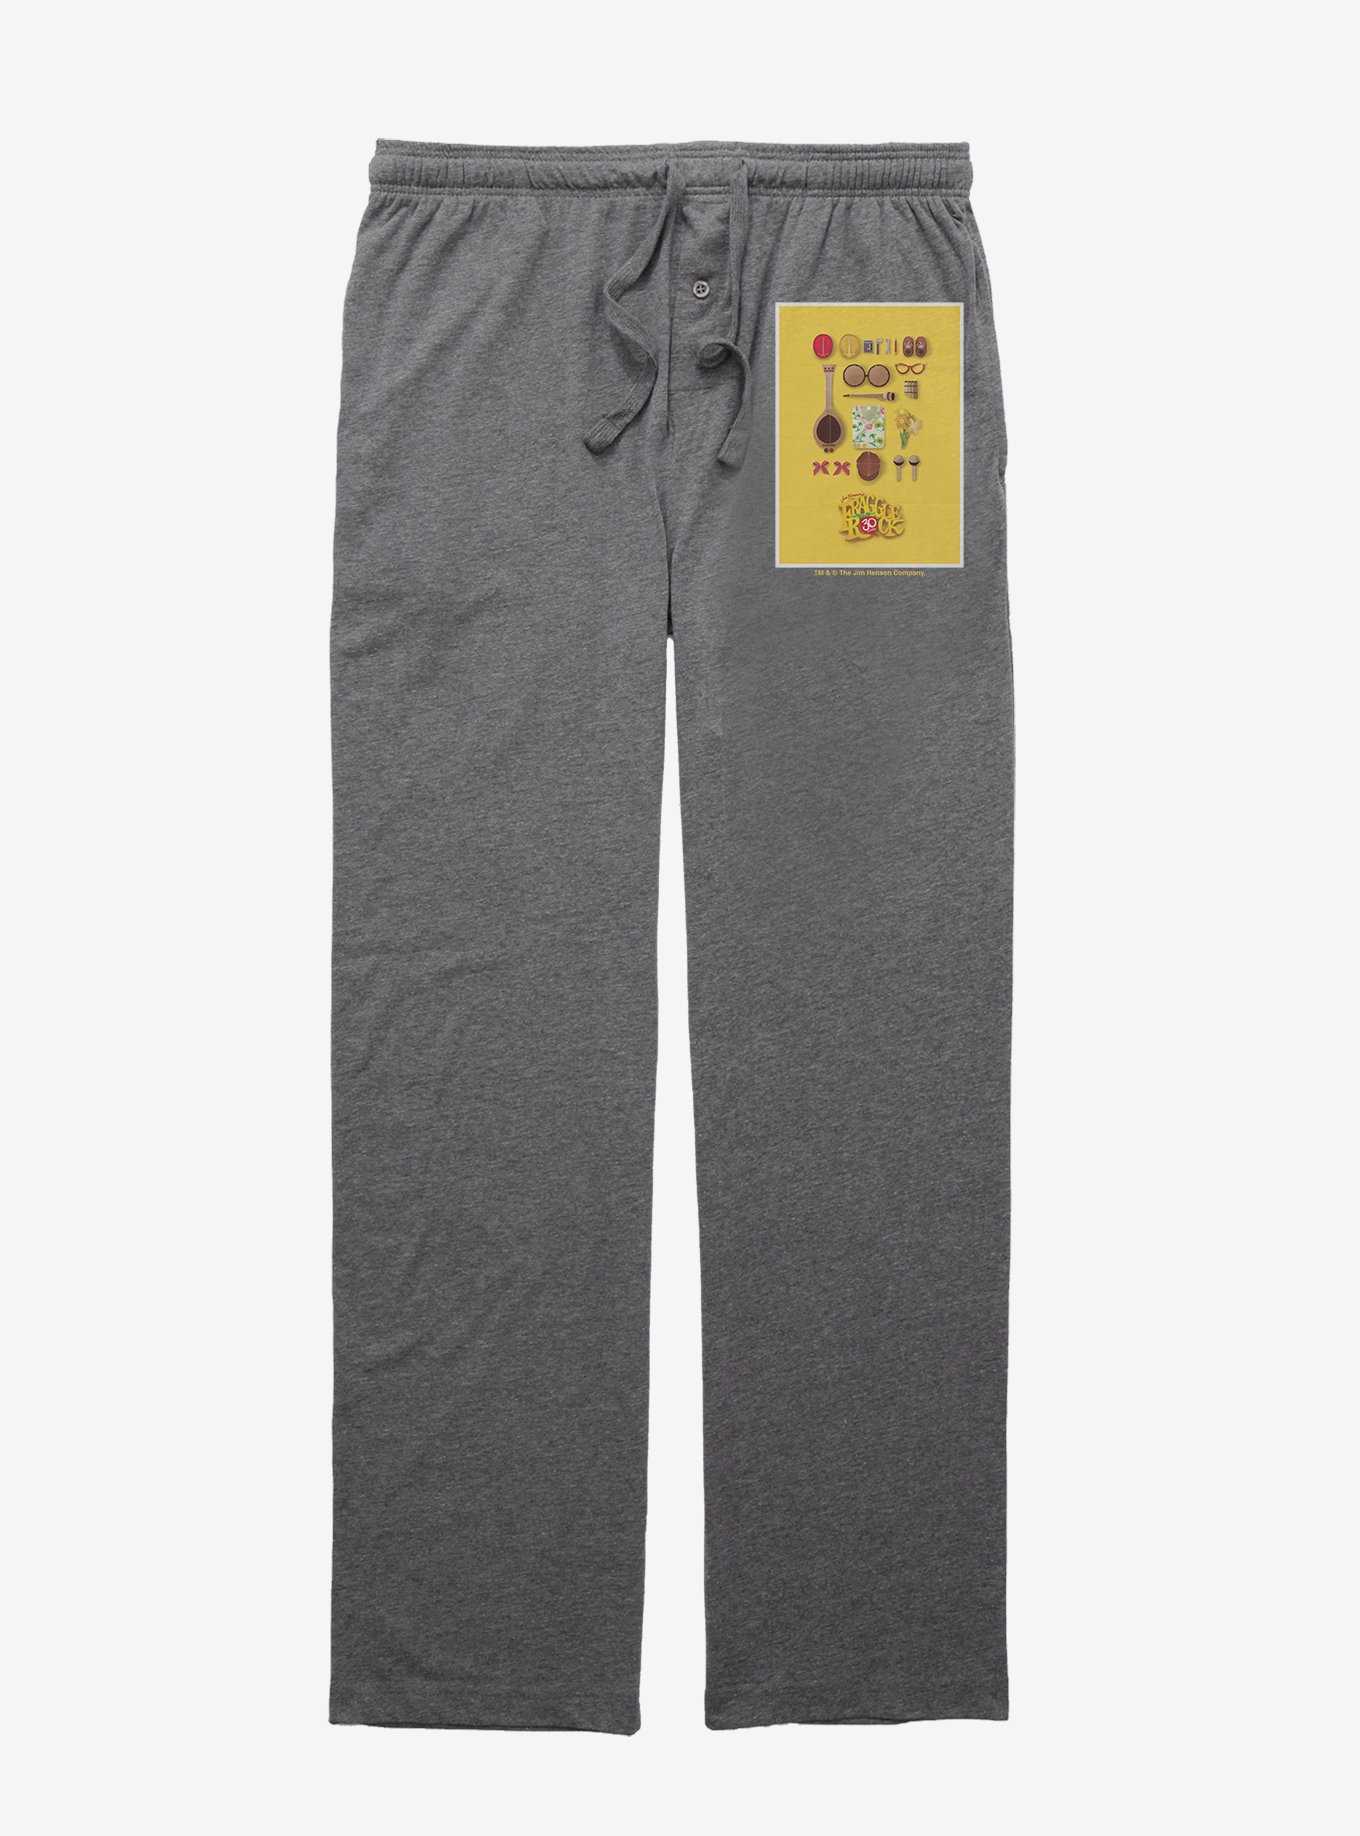 Jim Henson's Fraggle Rock 30 Years Pajama Pants, GRAPHITE HEATHER, hi-res